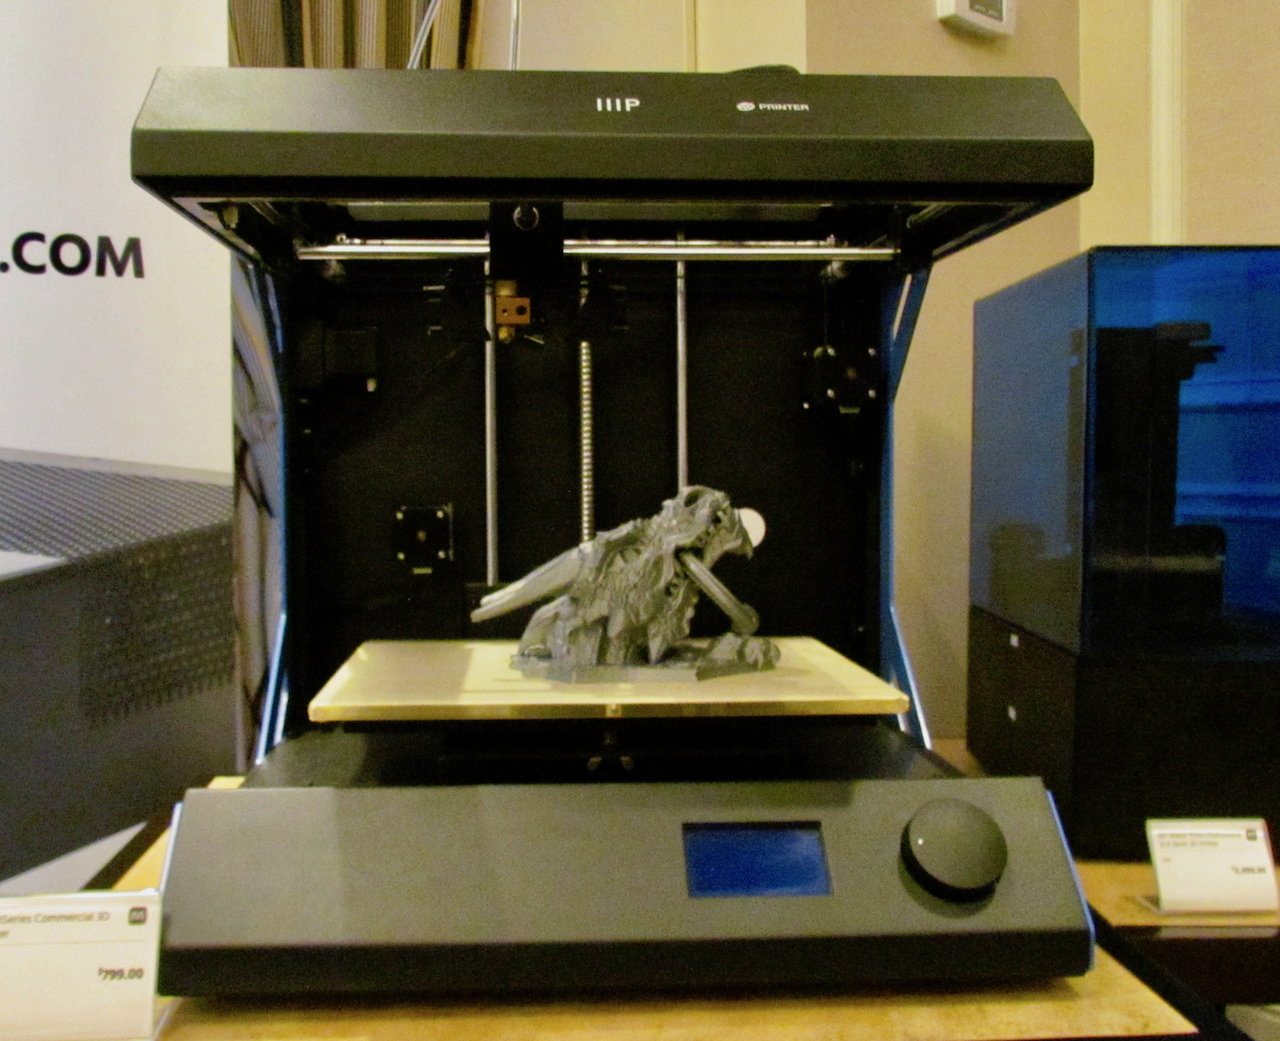  The new Monoprice 3Series Commercial professional desktop 3D printer 